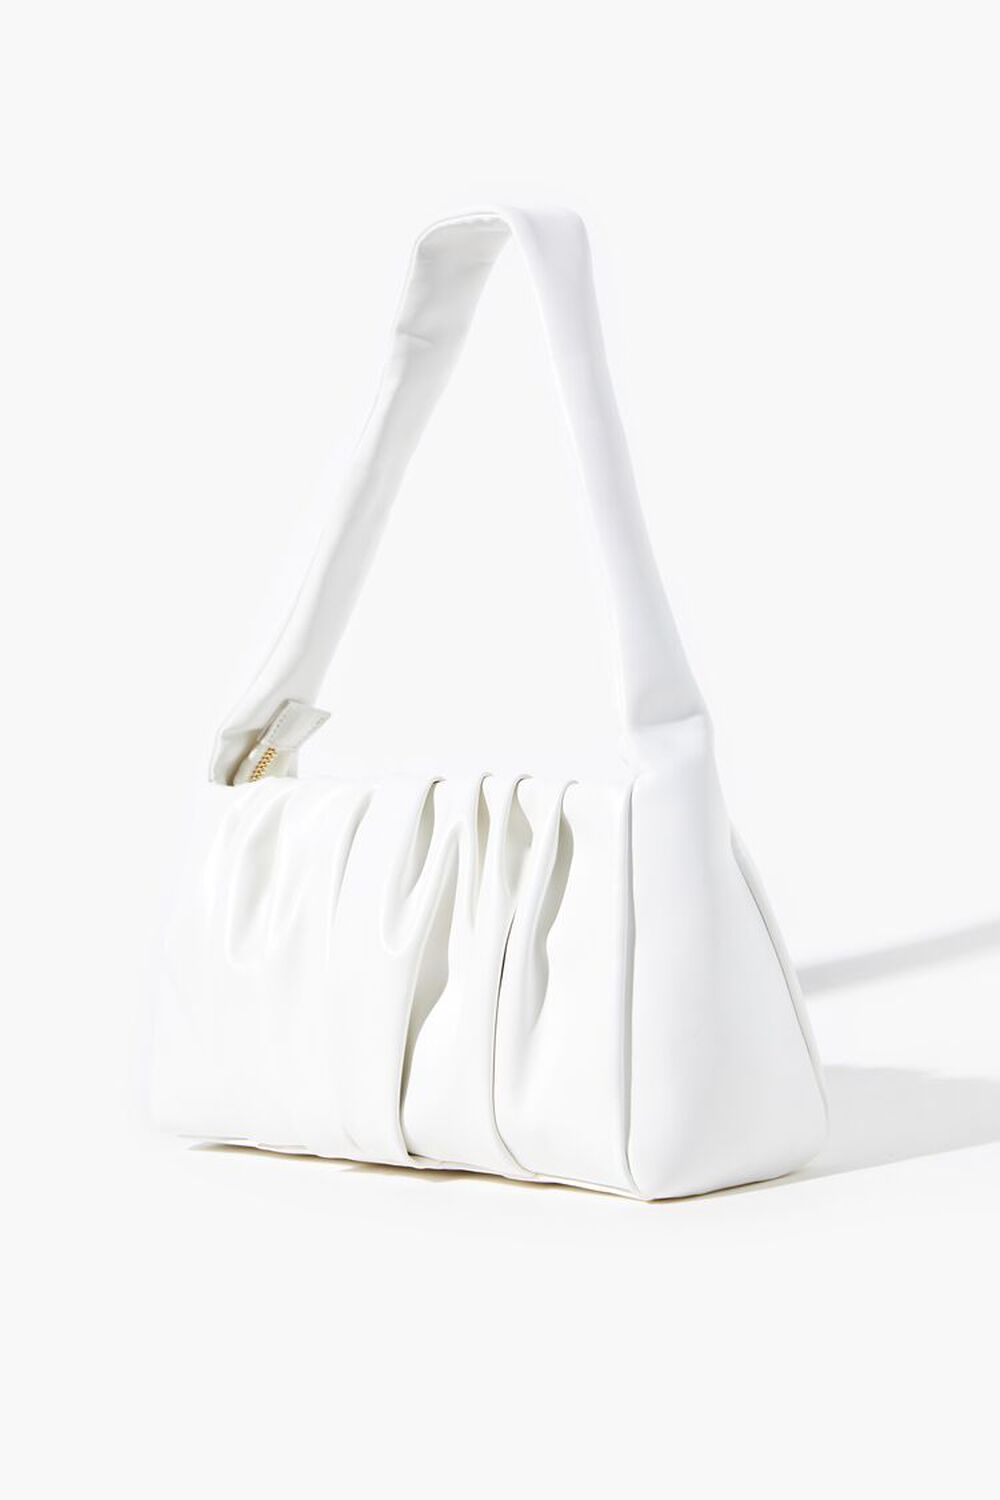 WHITE Faux Leather Ruched Shoulder Bag, image 2